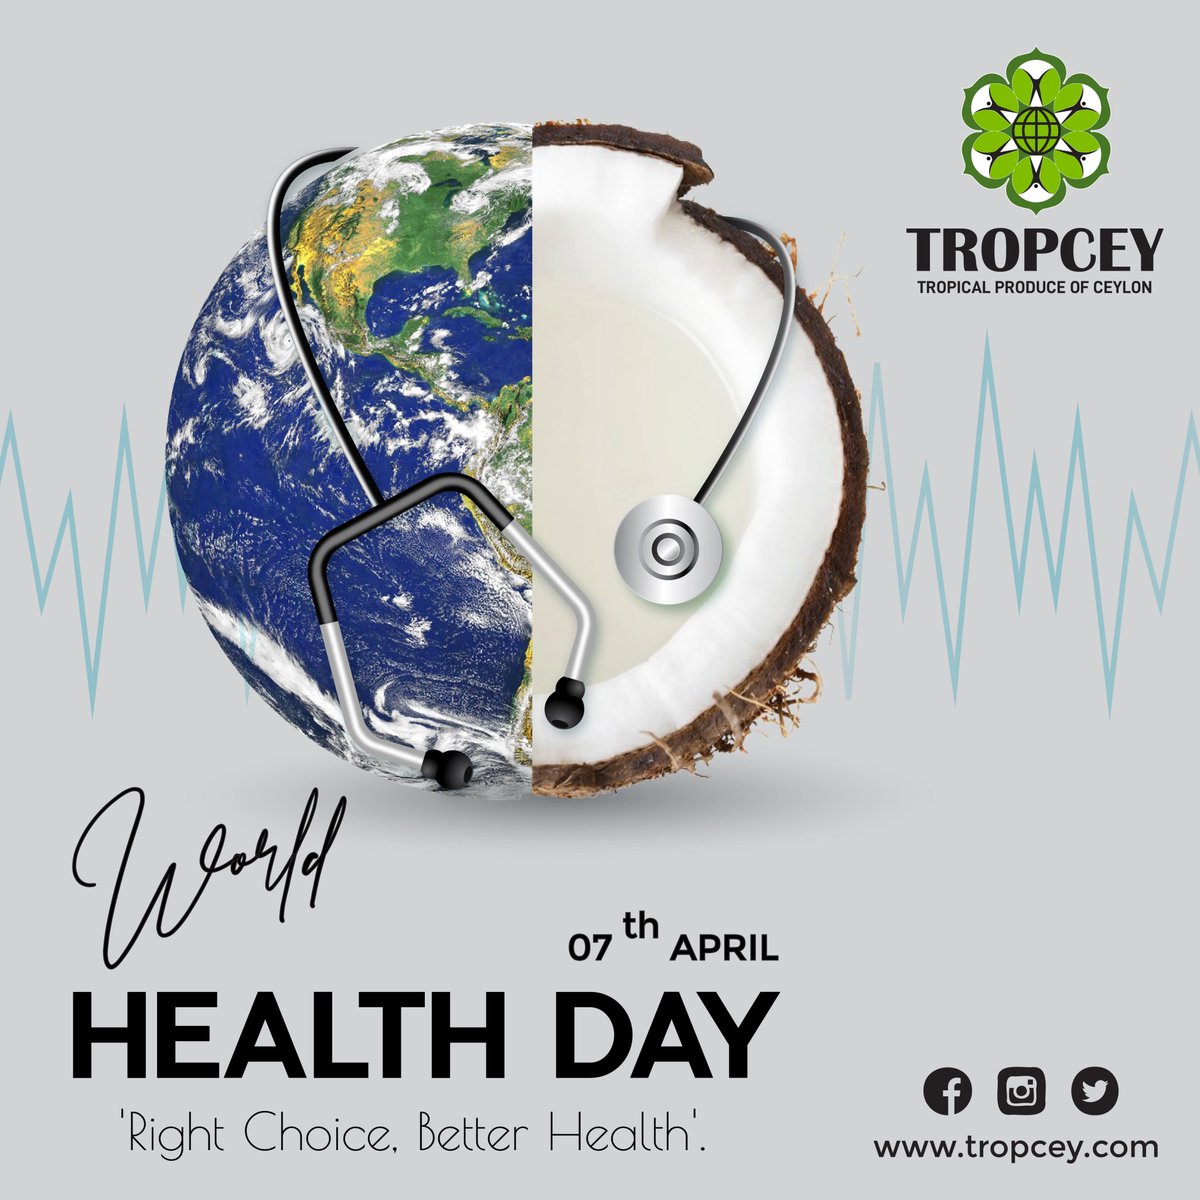 World Health Day...💪
#WorldHealthDay #tropceyexport #madeinsrilanka #coconutoil #coconutwater #coconutmilk #coconutchips #coconut #coconutproducts #coconutindustry #tropical